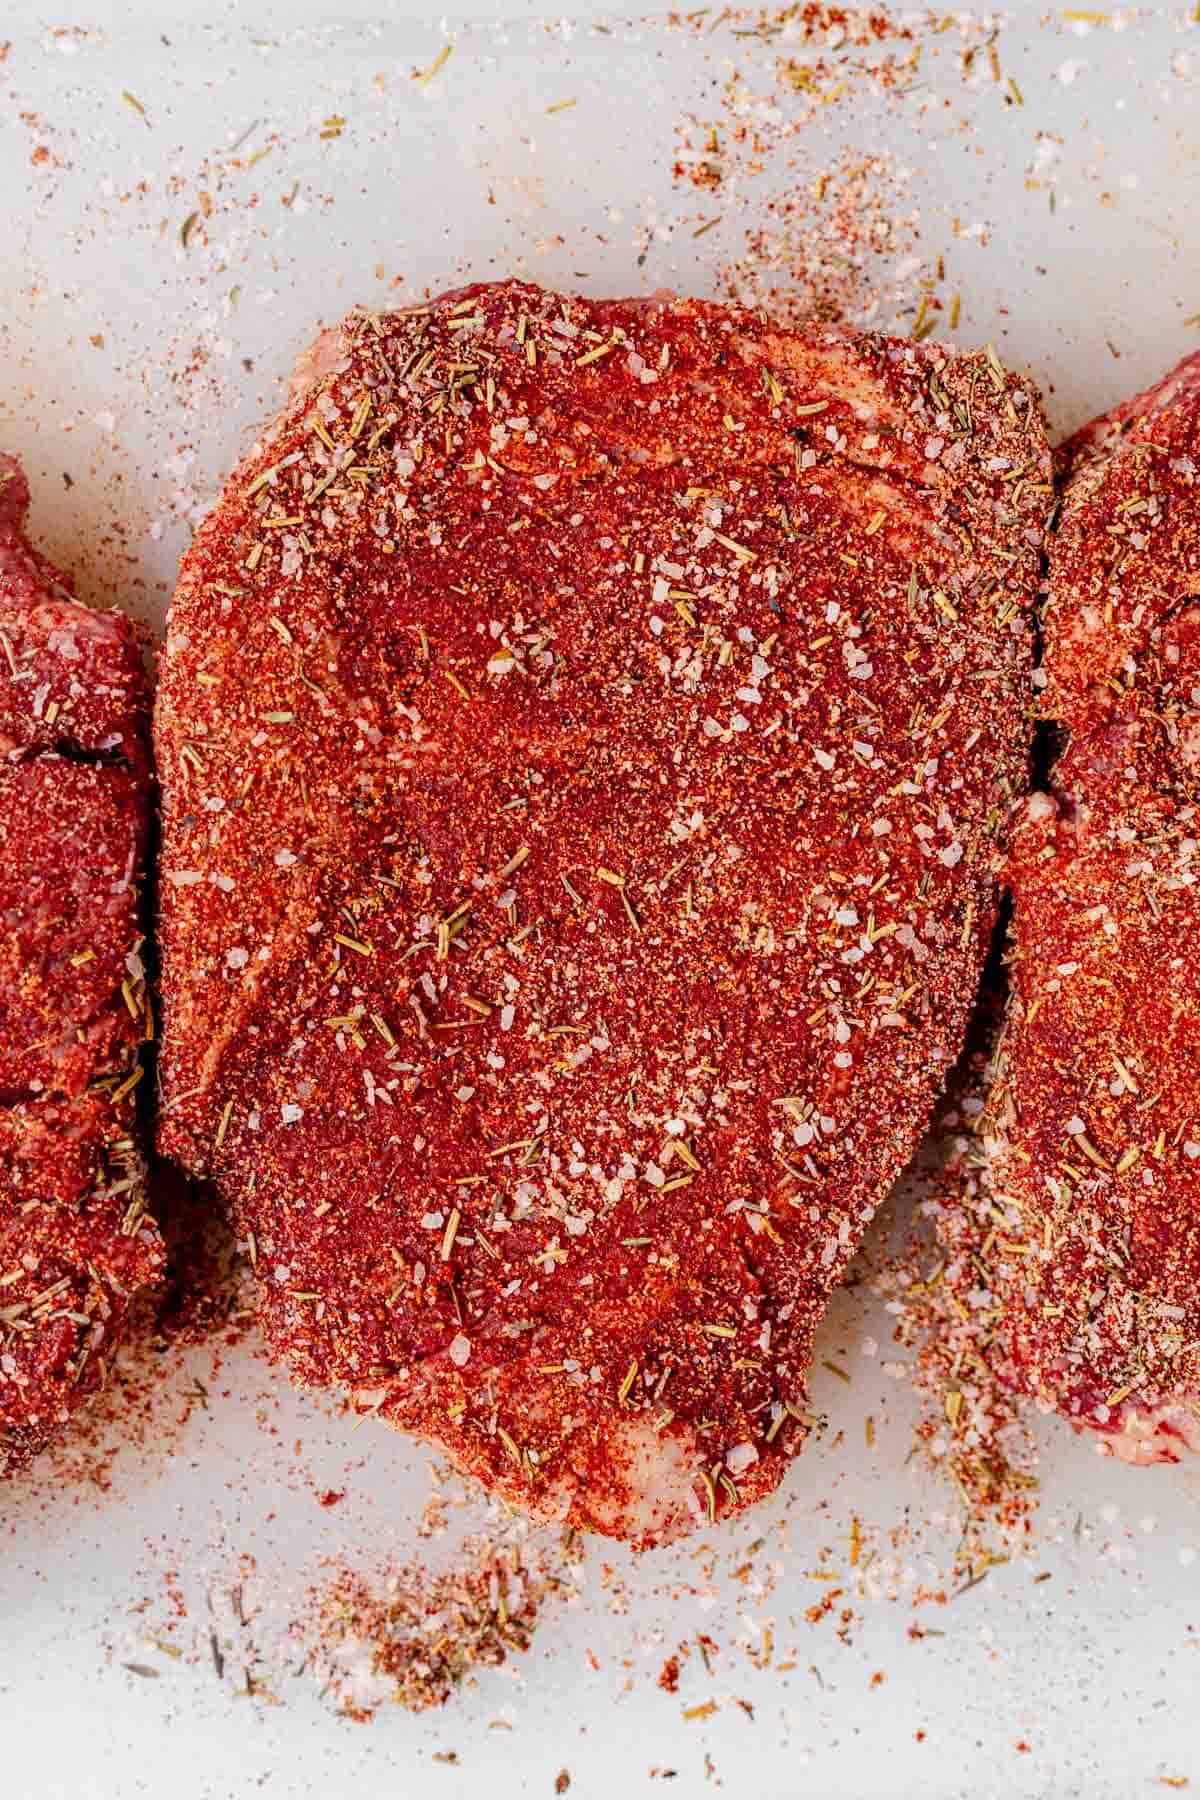 steak seasoning rubbed all over raw ribeye